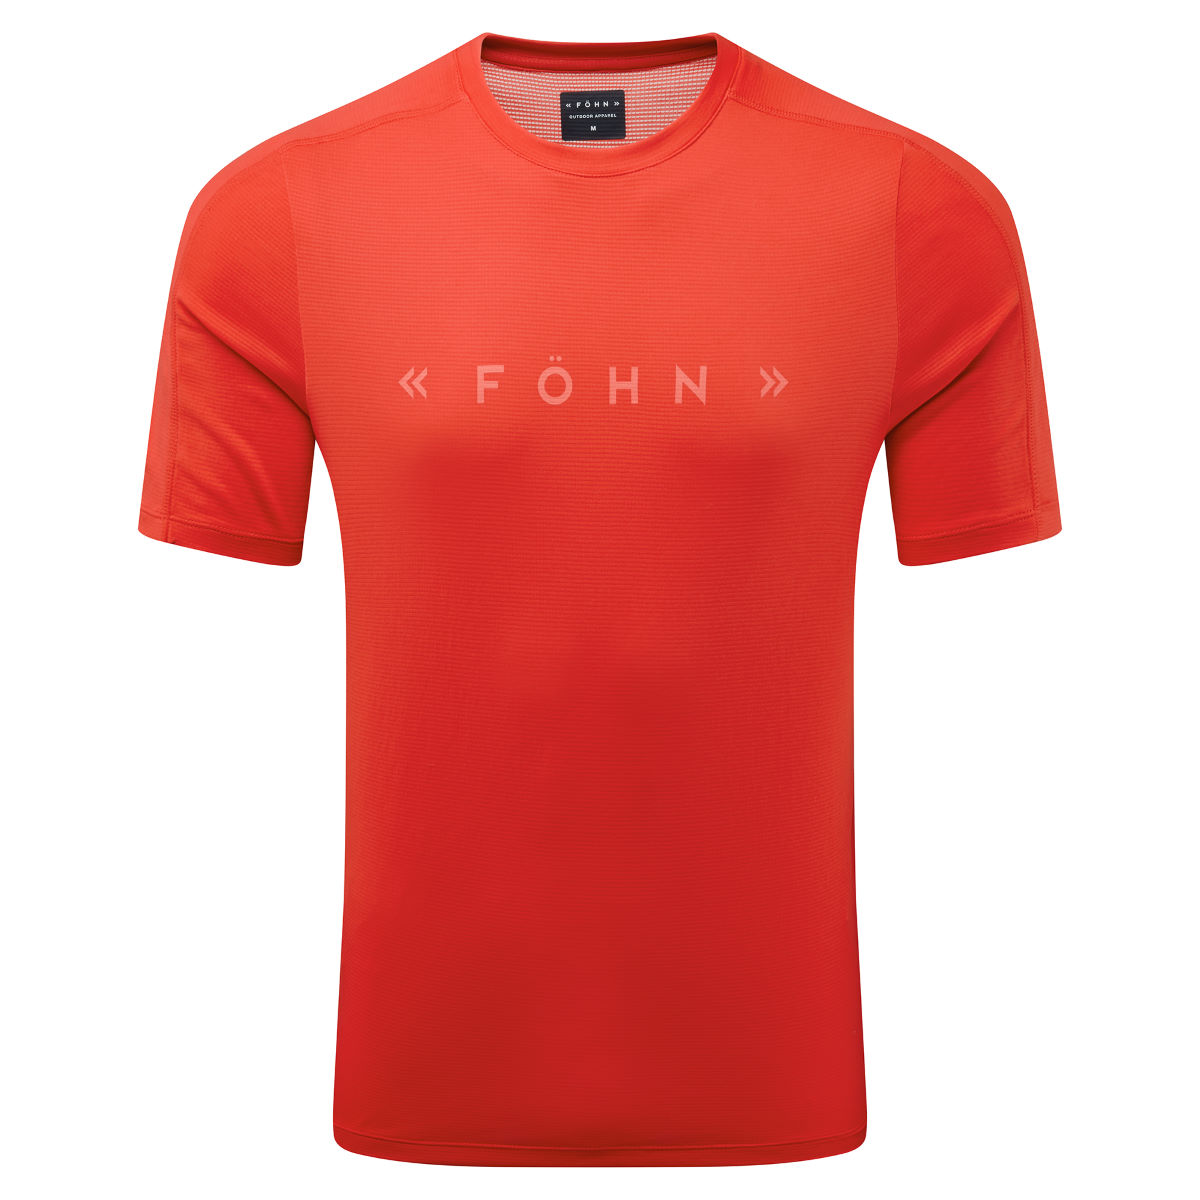 Camiseta de manga corta Föhn (con protección solar) - Camisetas